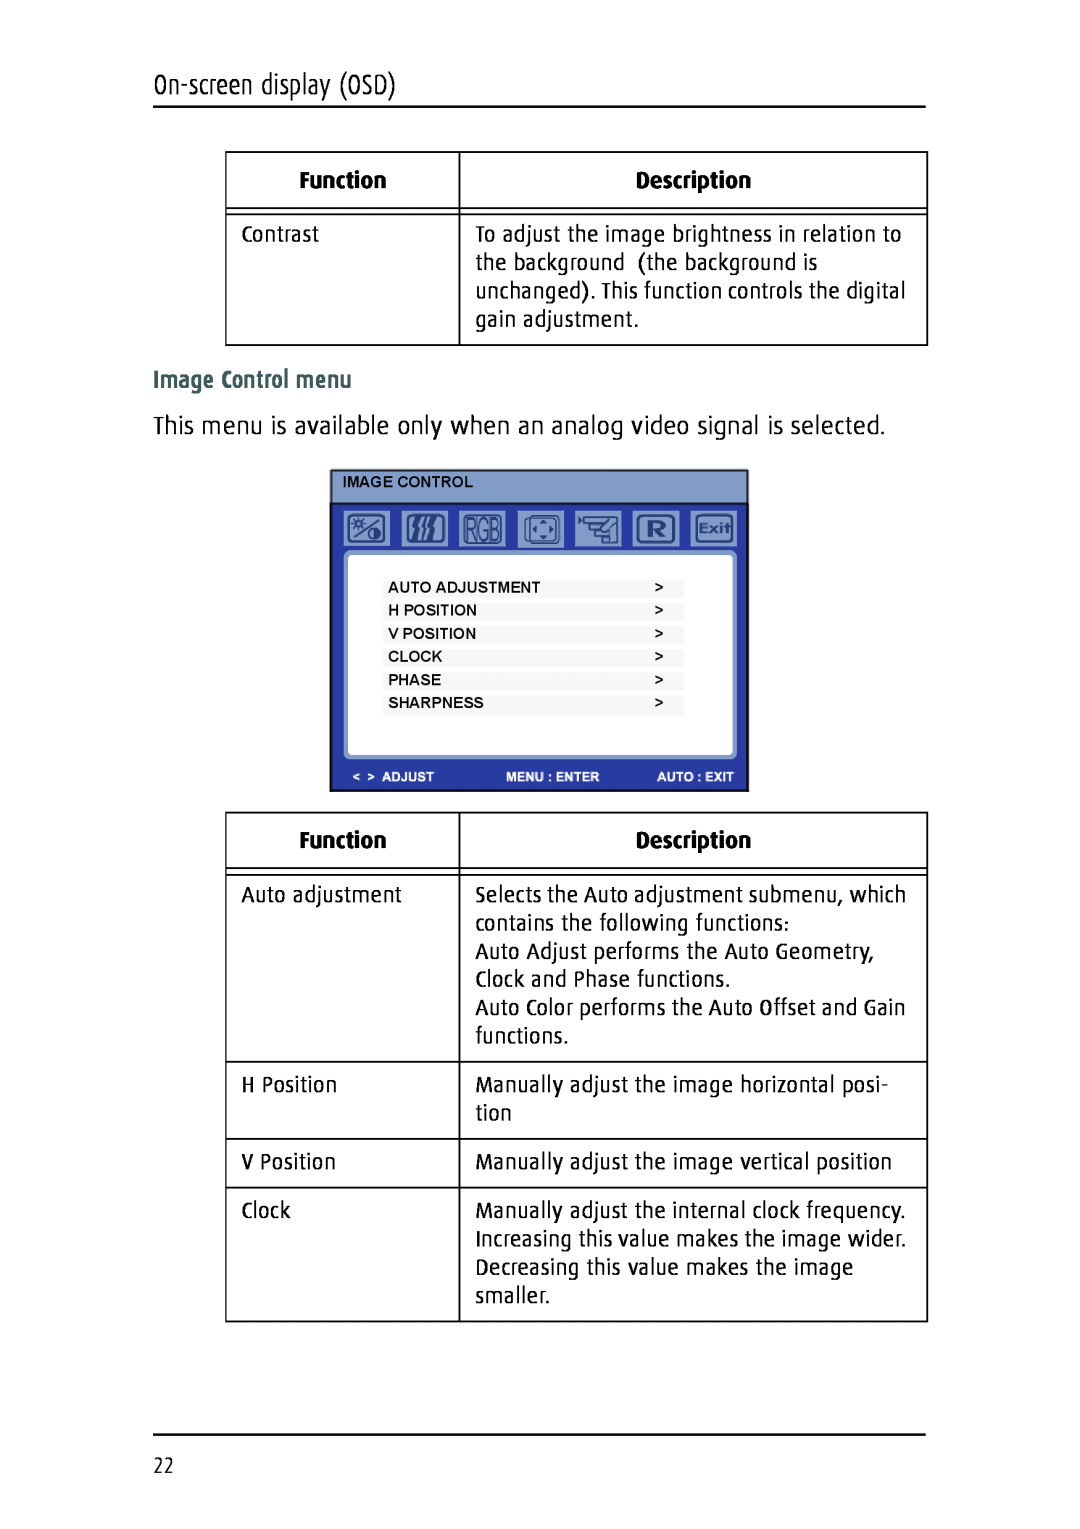 Barco 1219 user manual Image Control menu, On-screen display OSD, Function, Description 